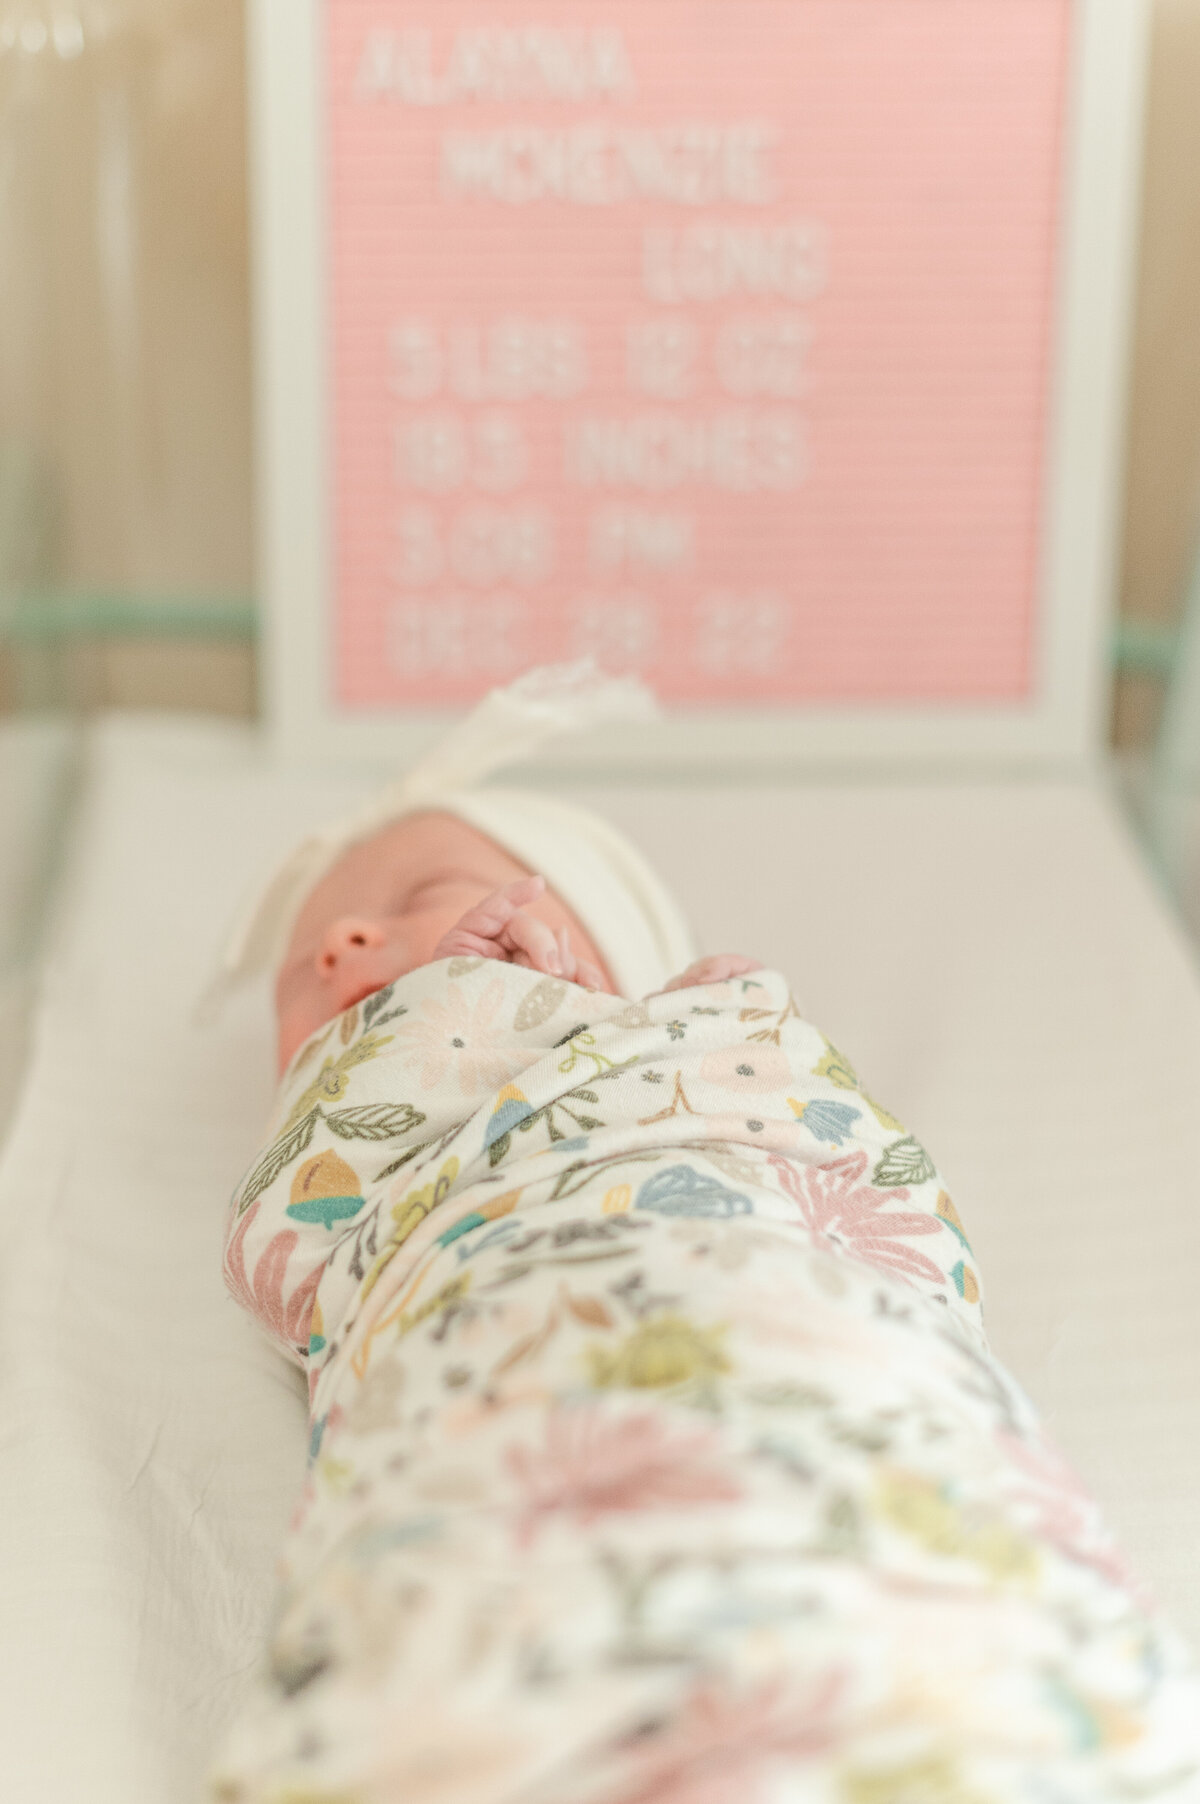 newborn sleeping in bassinet wrapped in flower blanket at hospital york pa